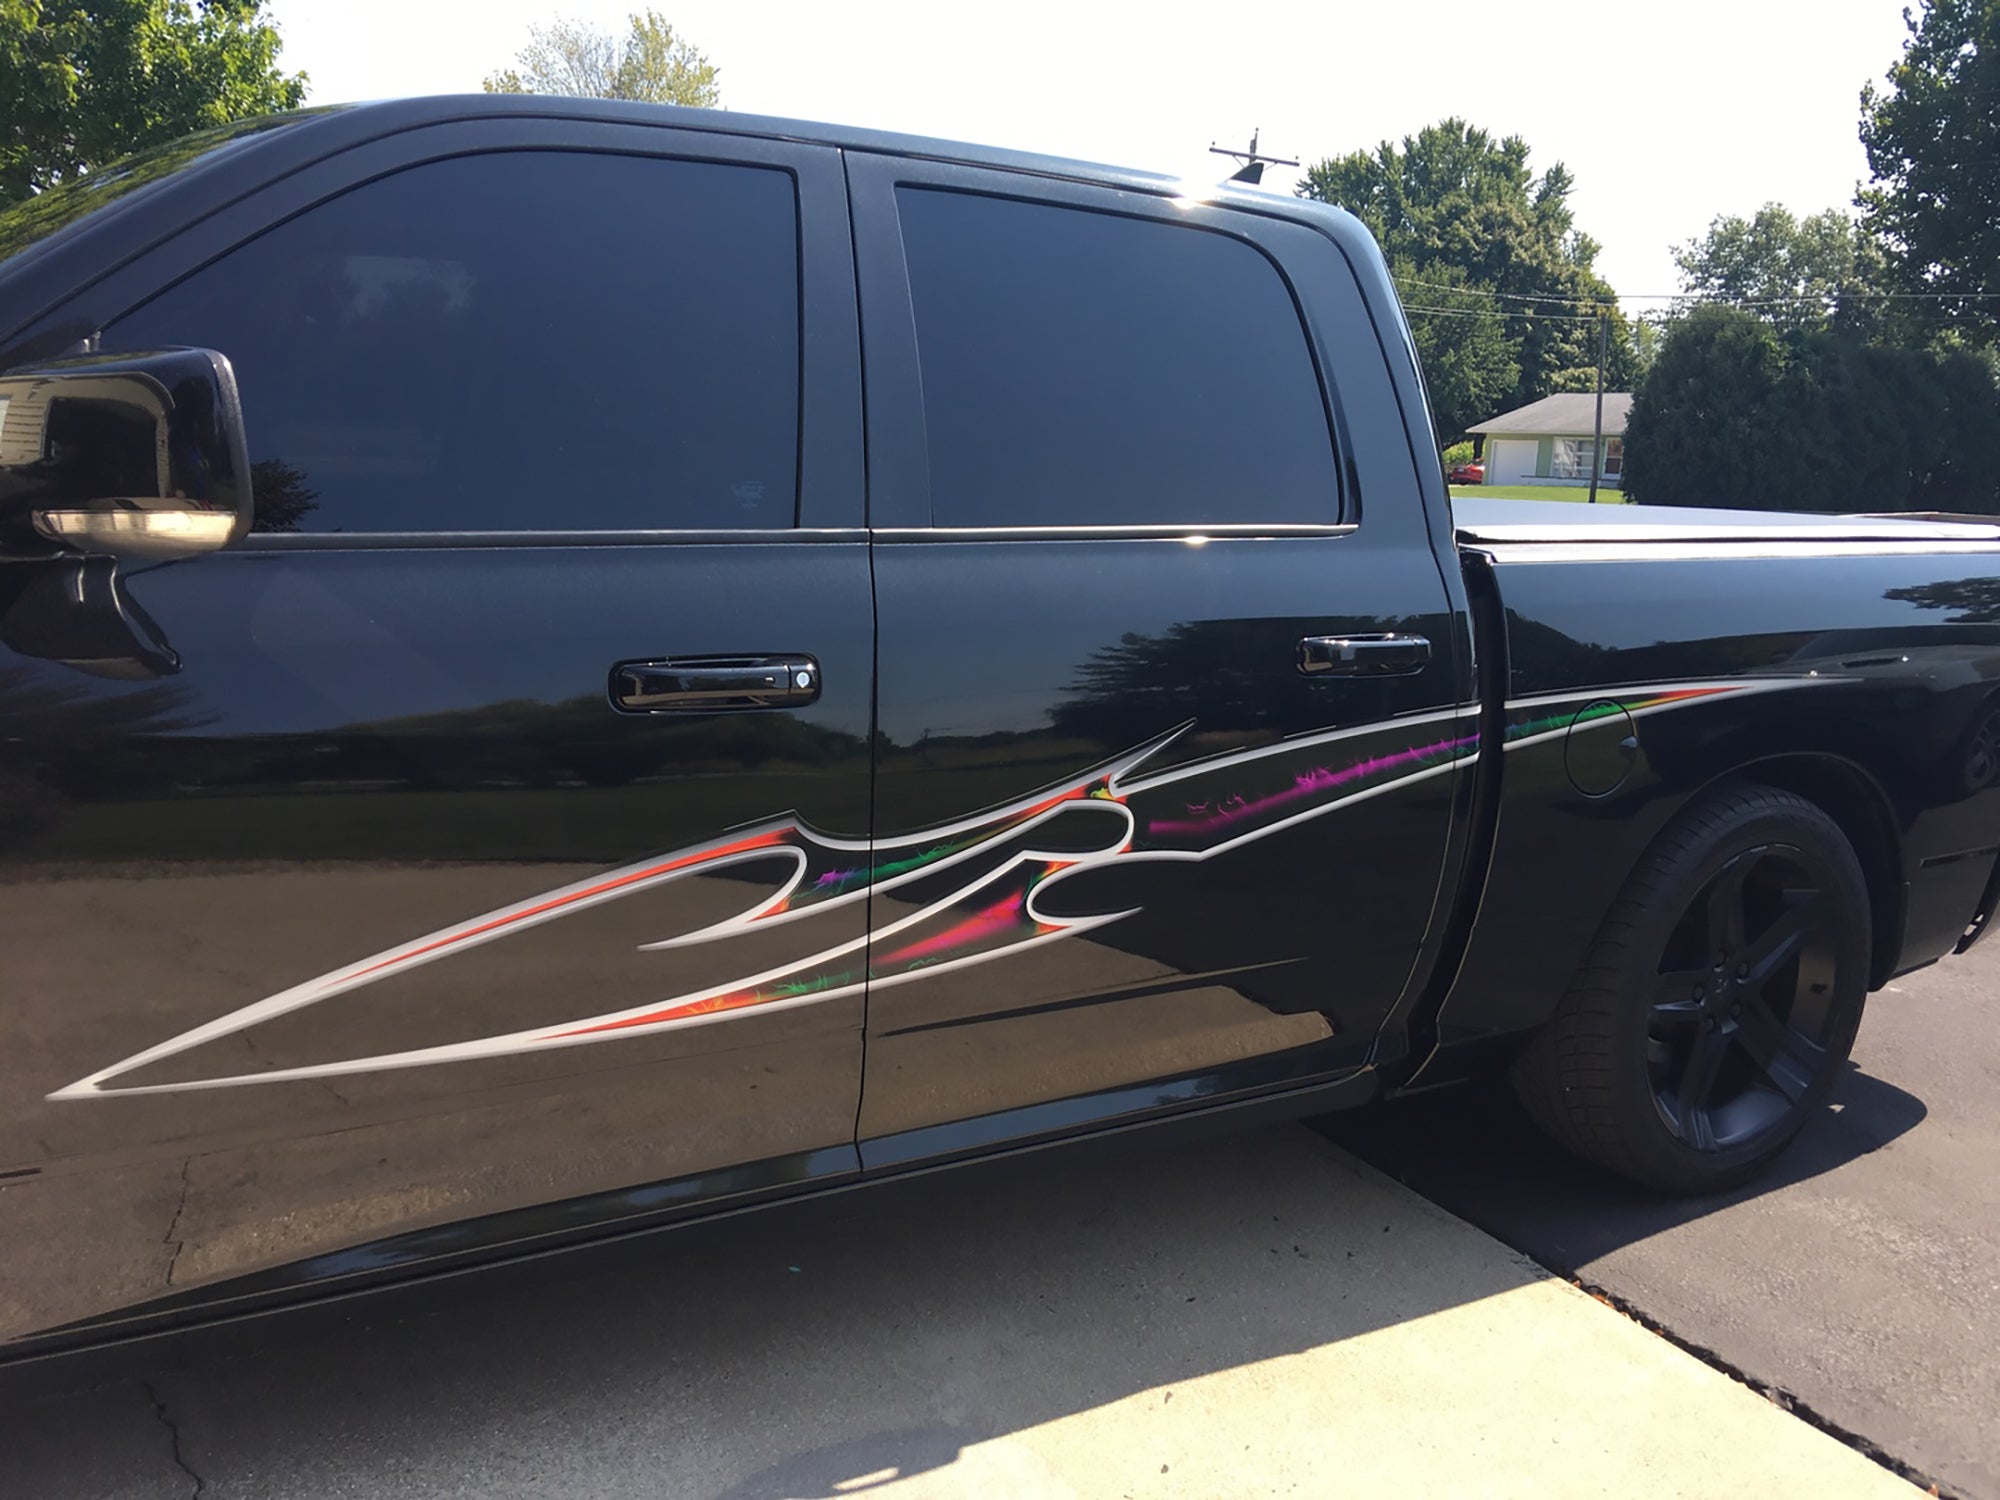 Blade multi color stripe on black pickup truck